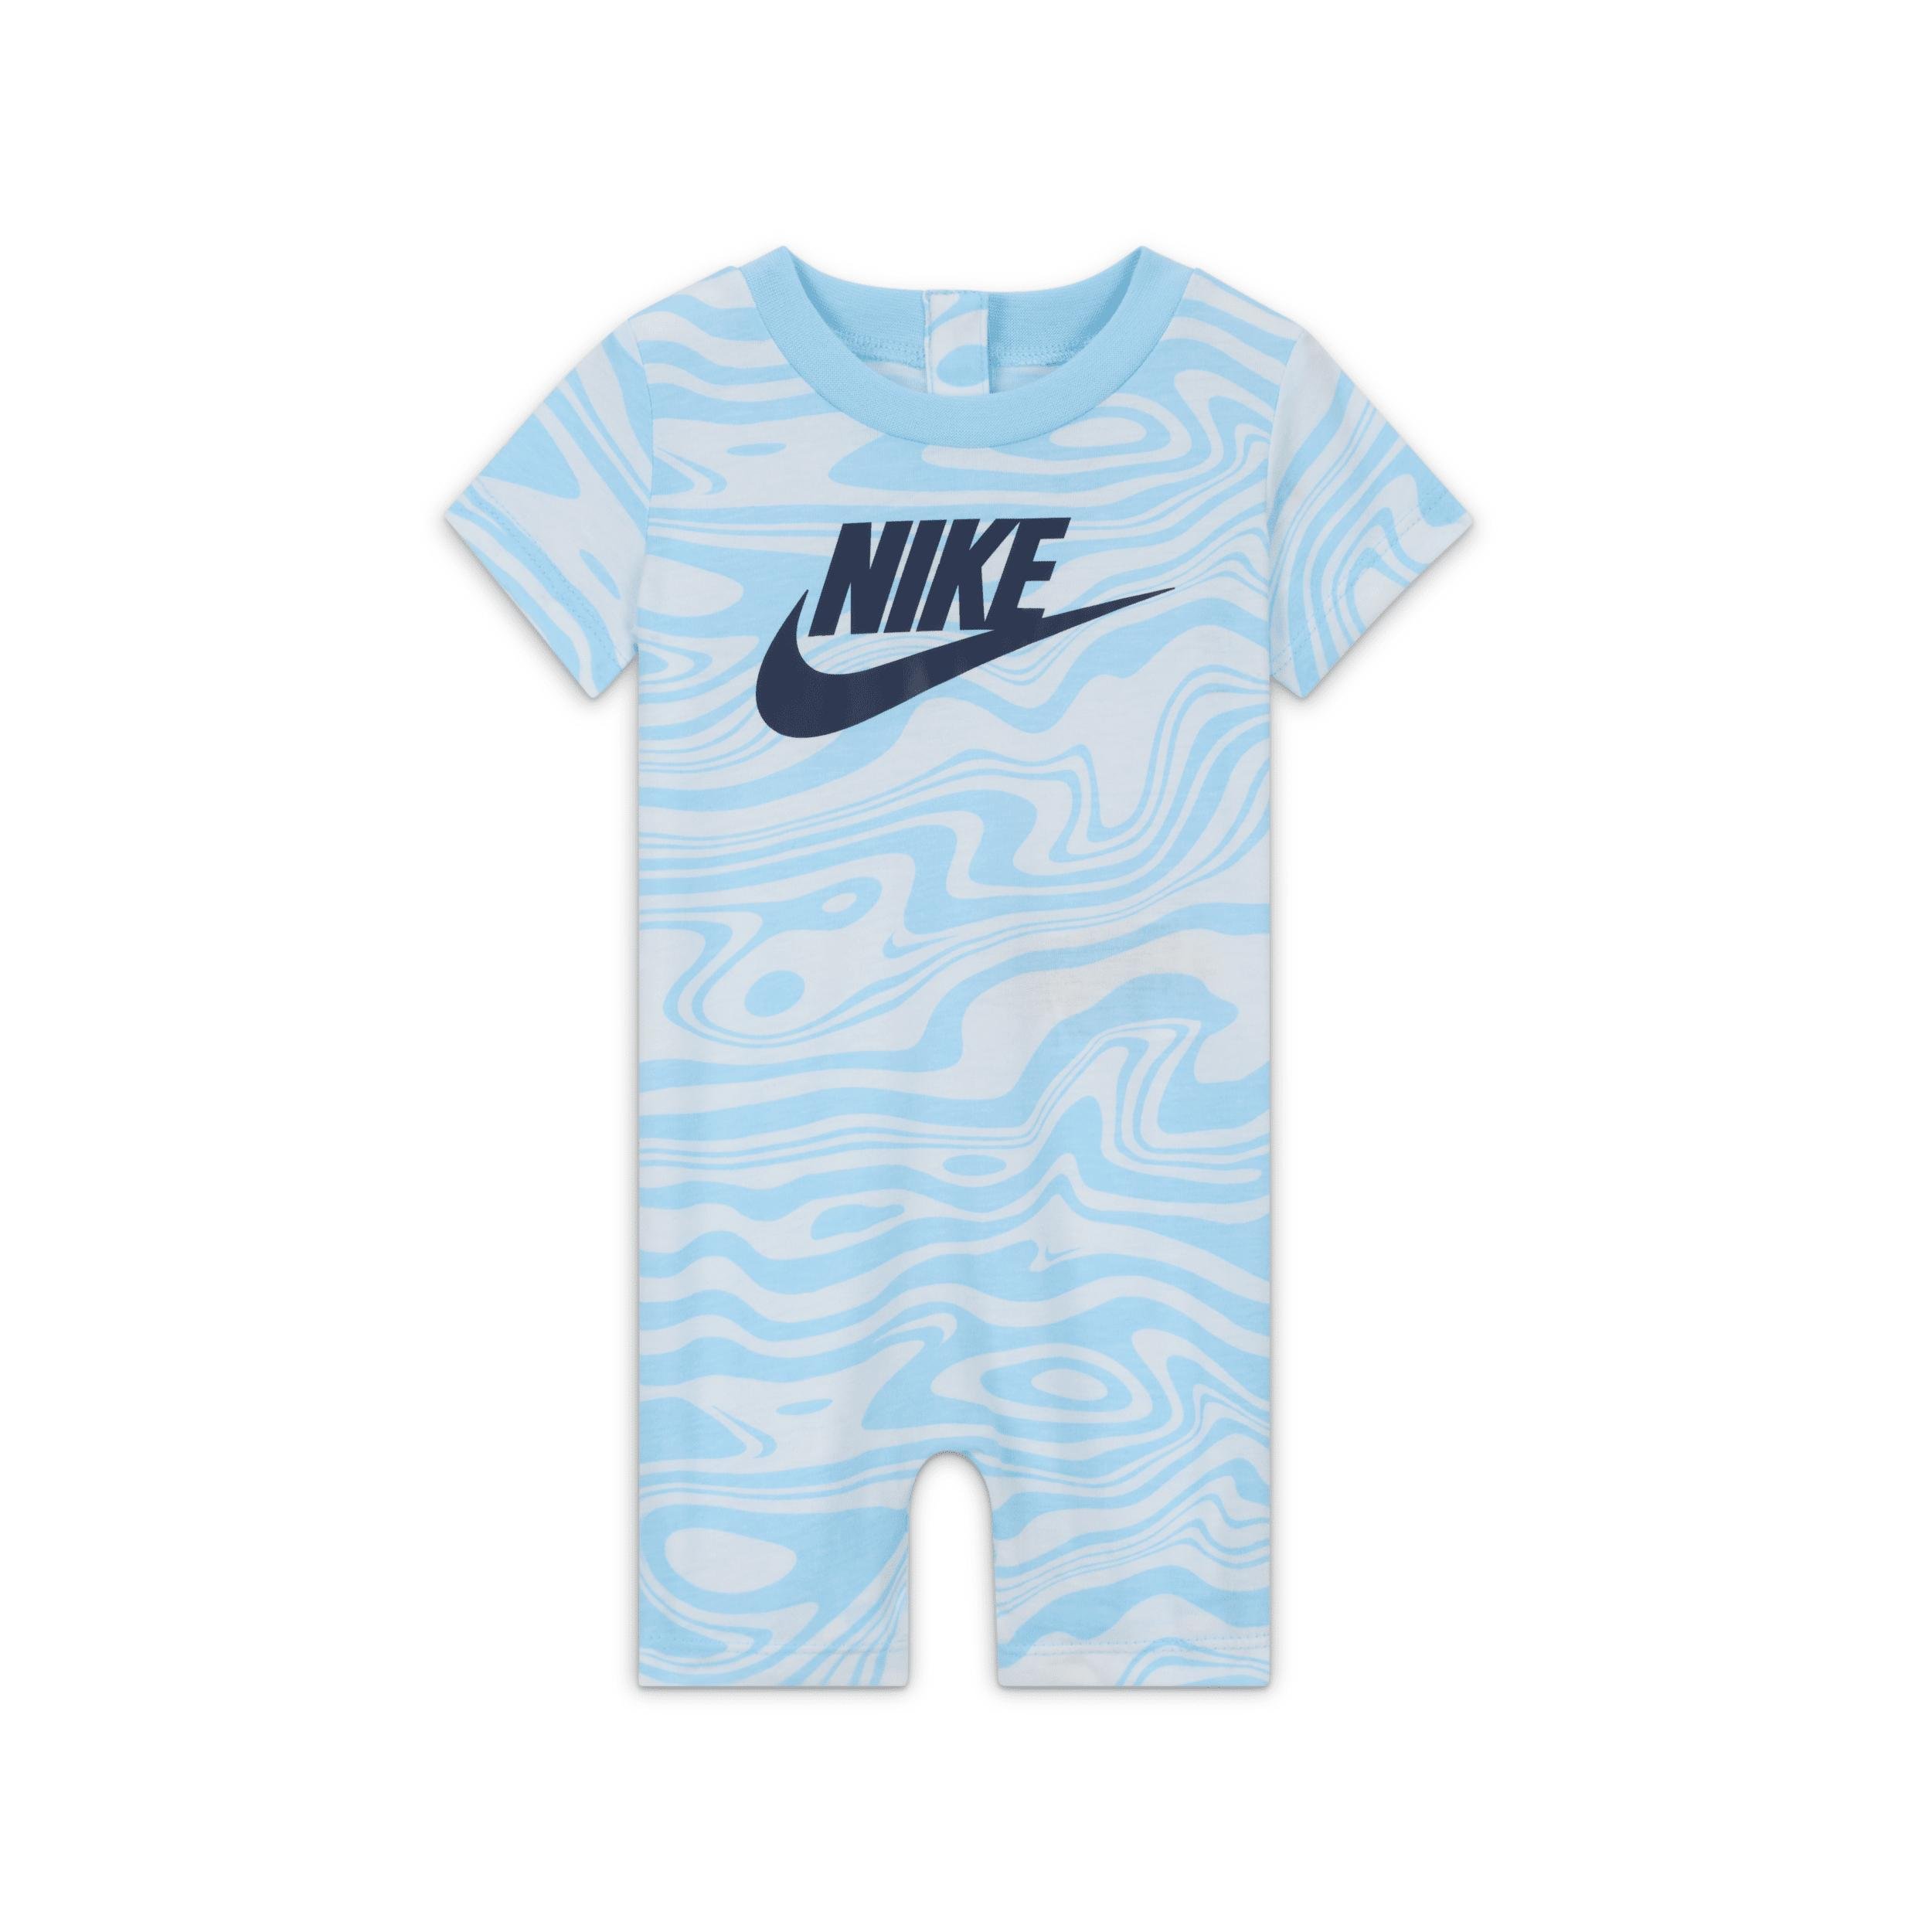 Nike Sportswear Paint Your Future Baby (0-9M) Tee Romper by NIKE